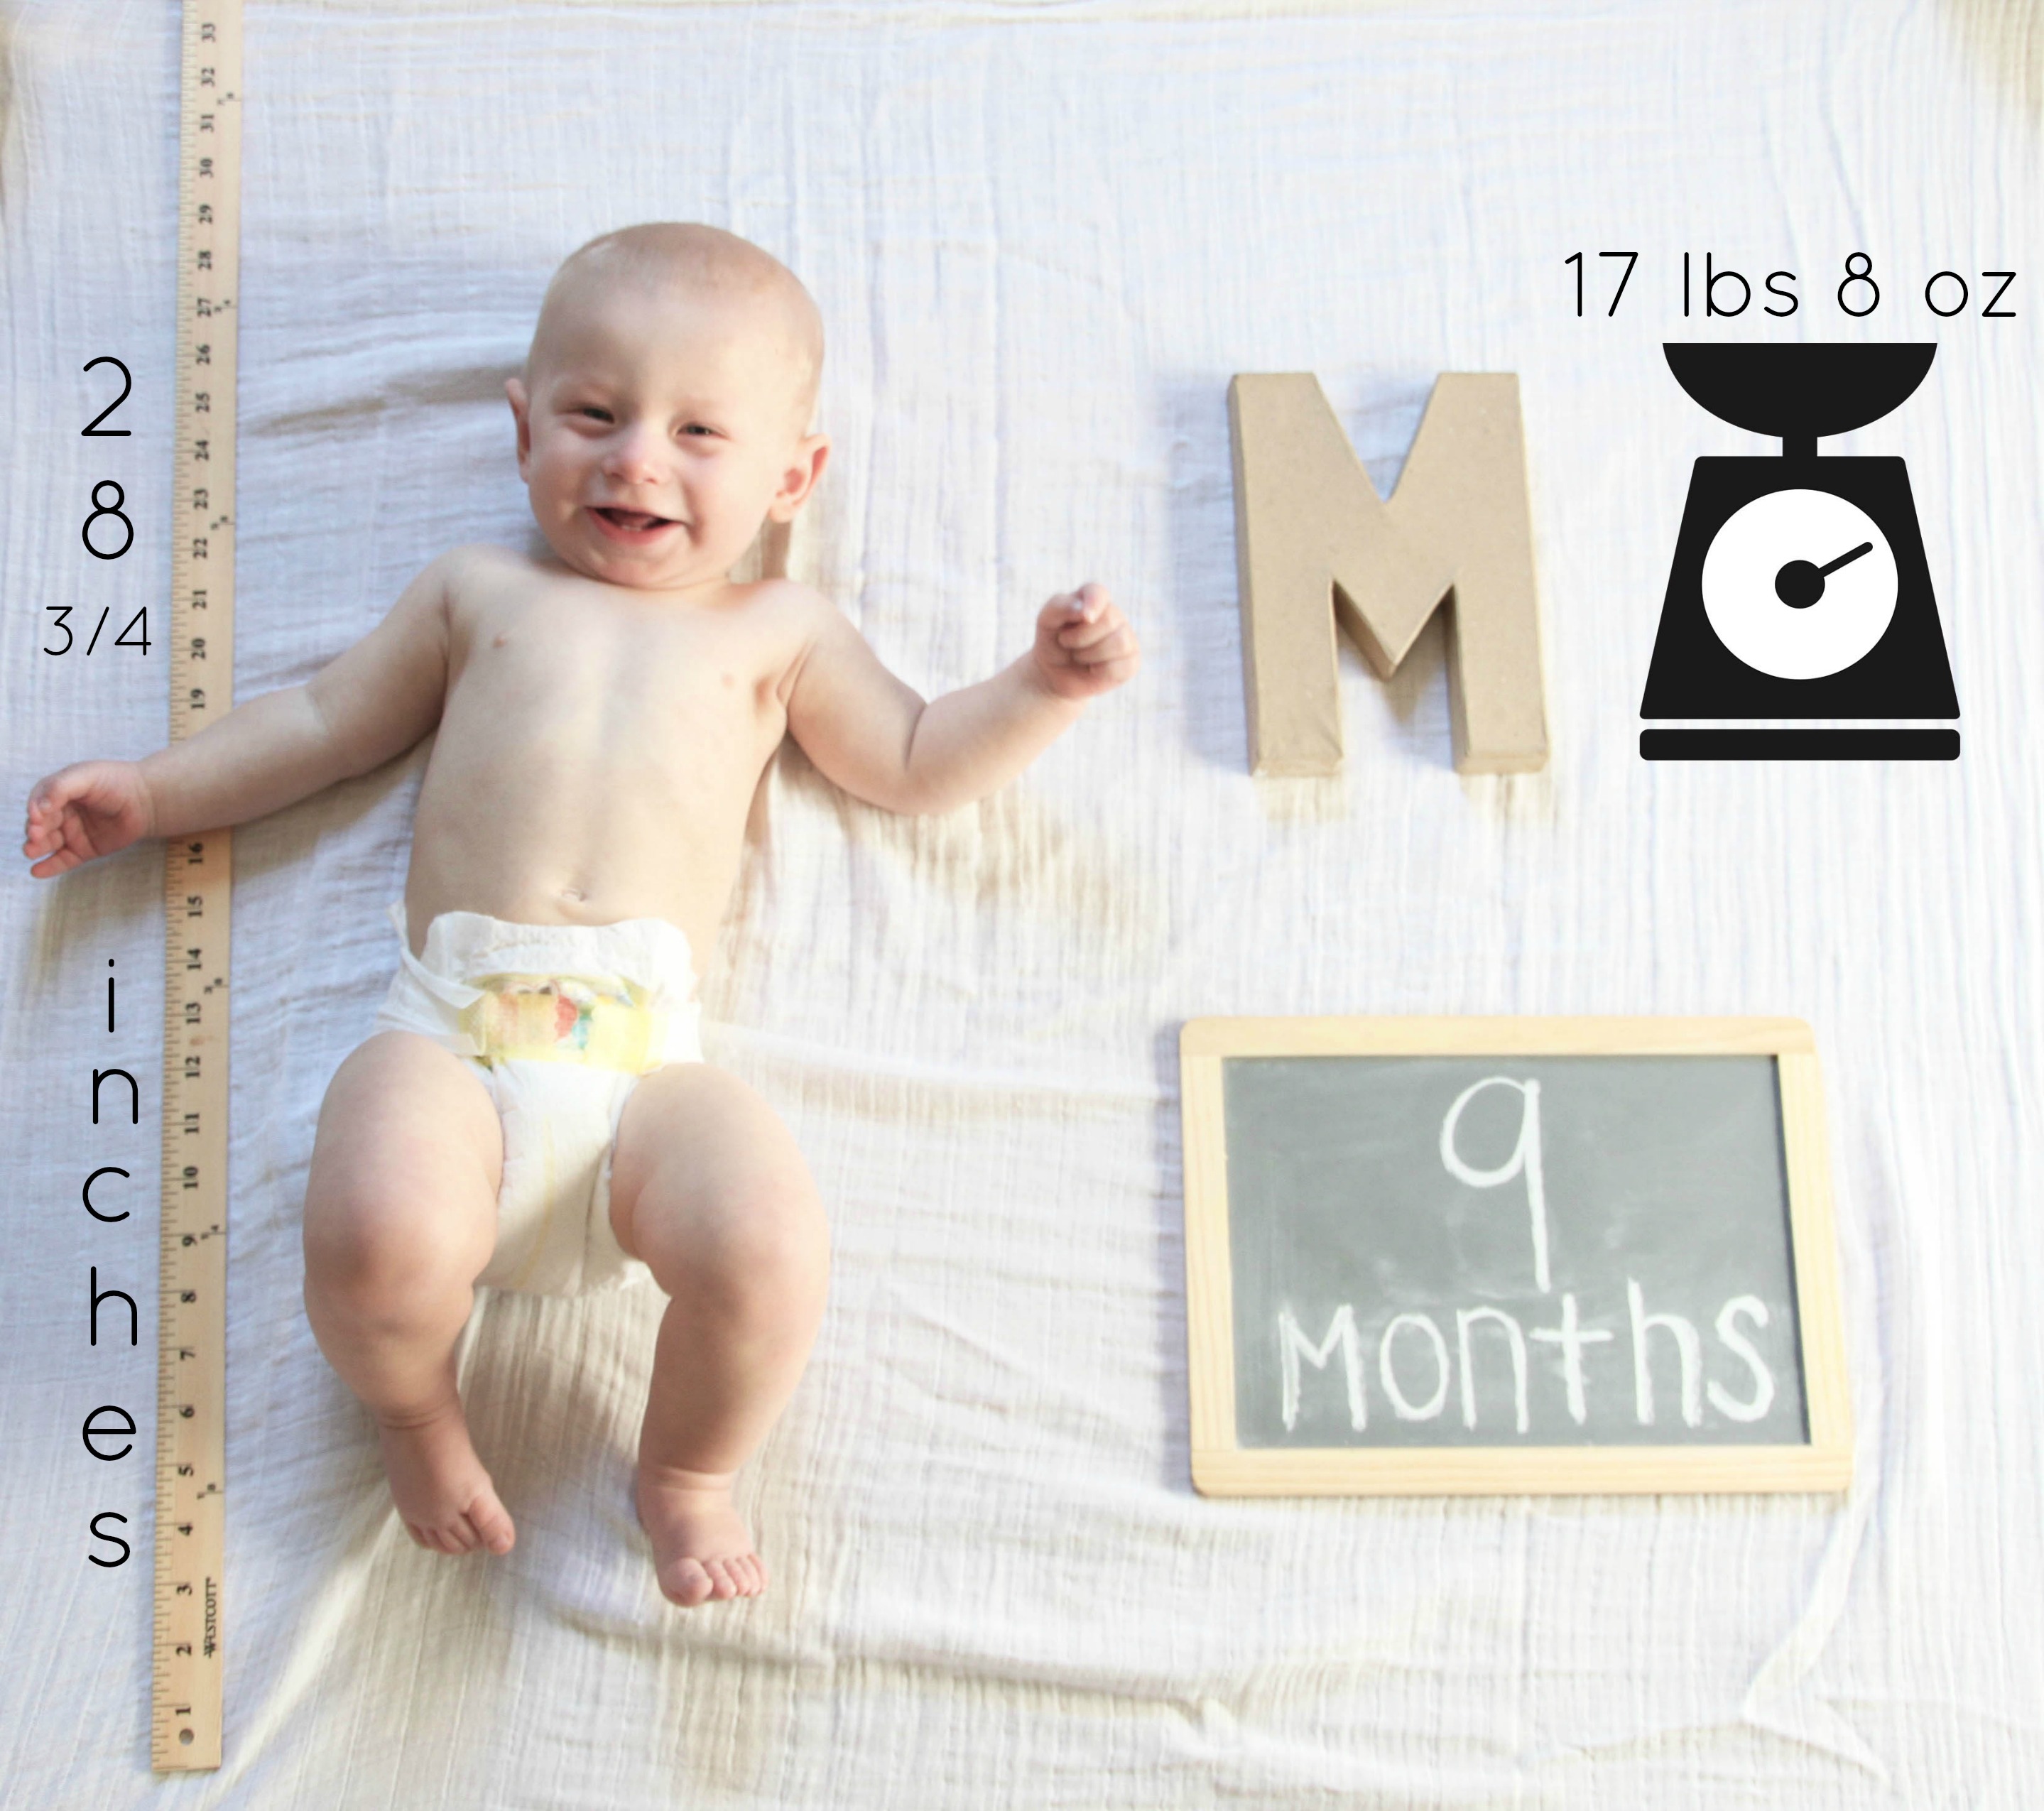 Фотосессия 9 месяцев ребенку